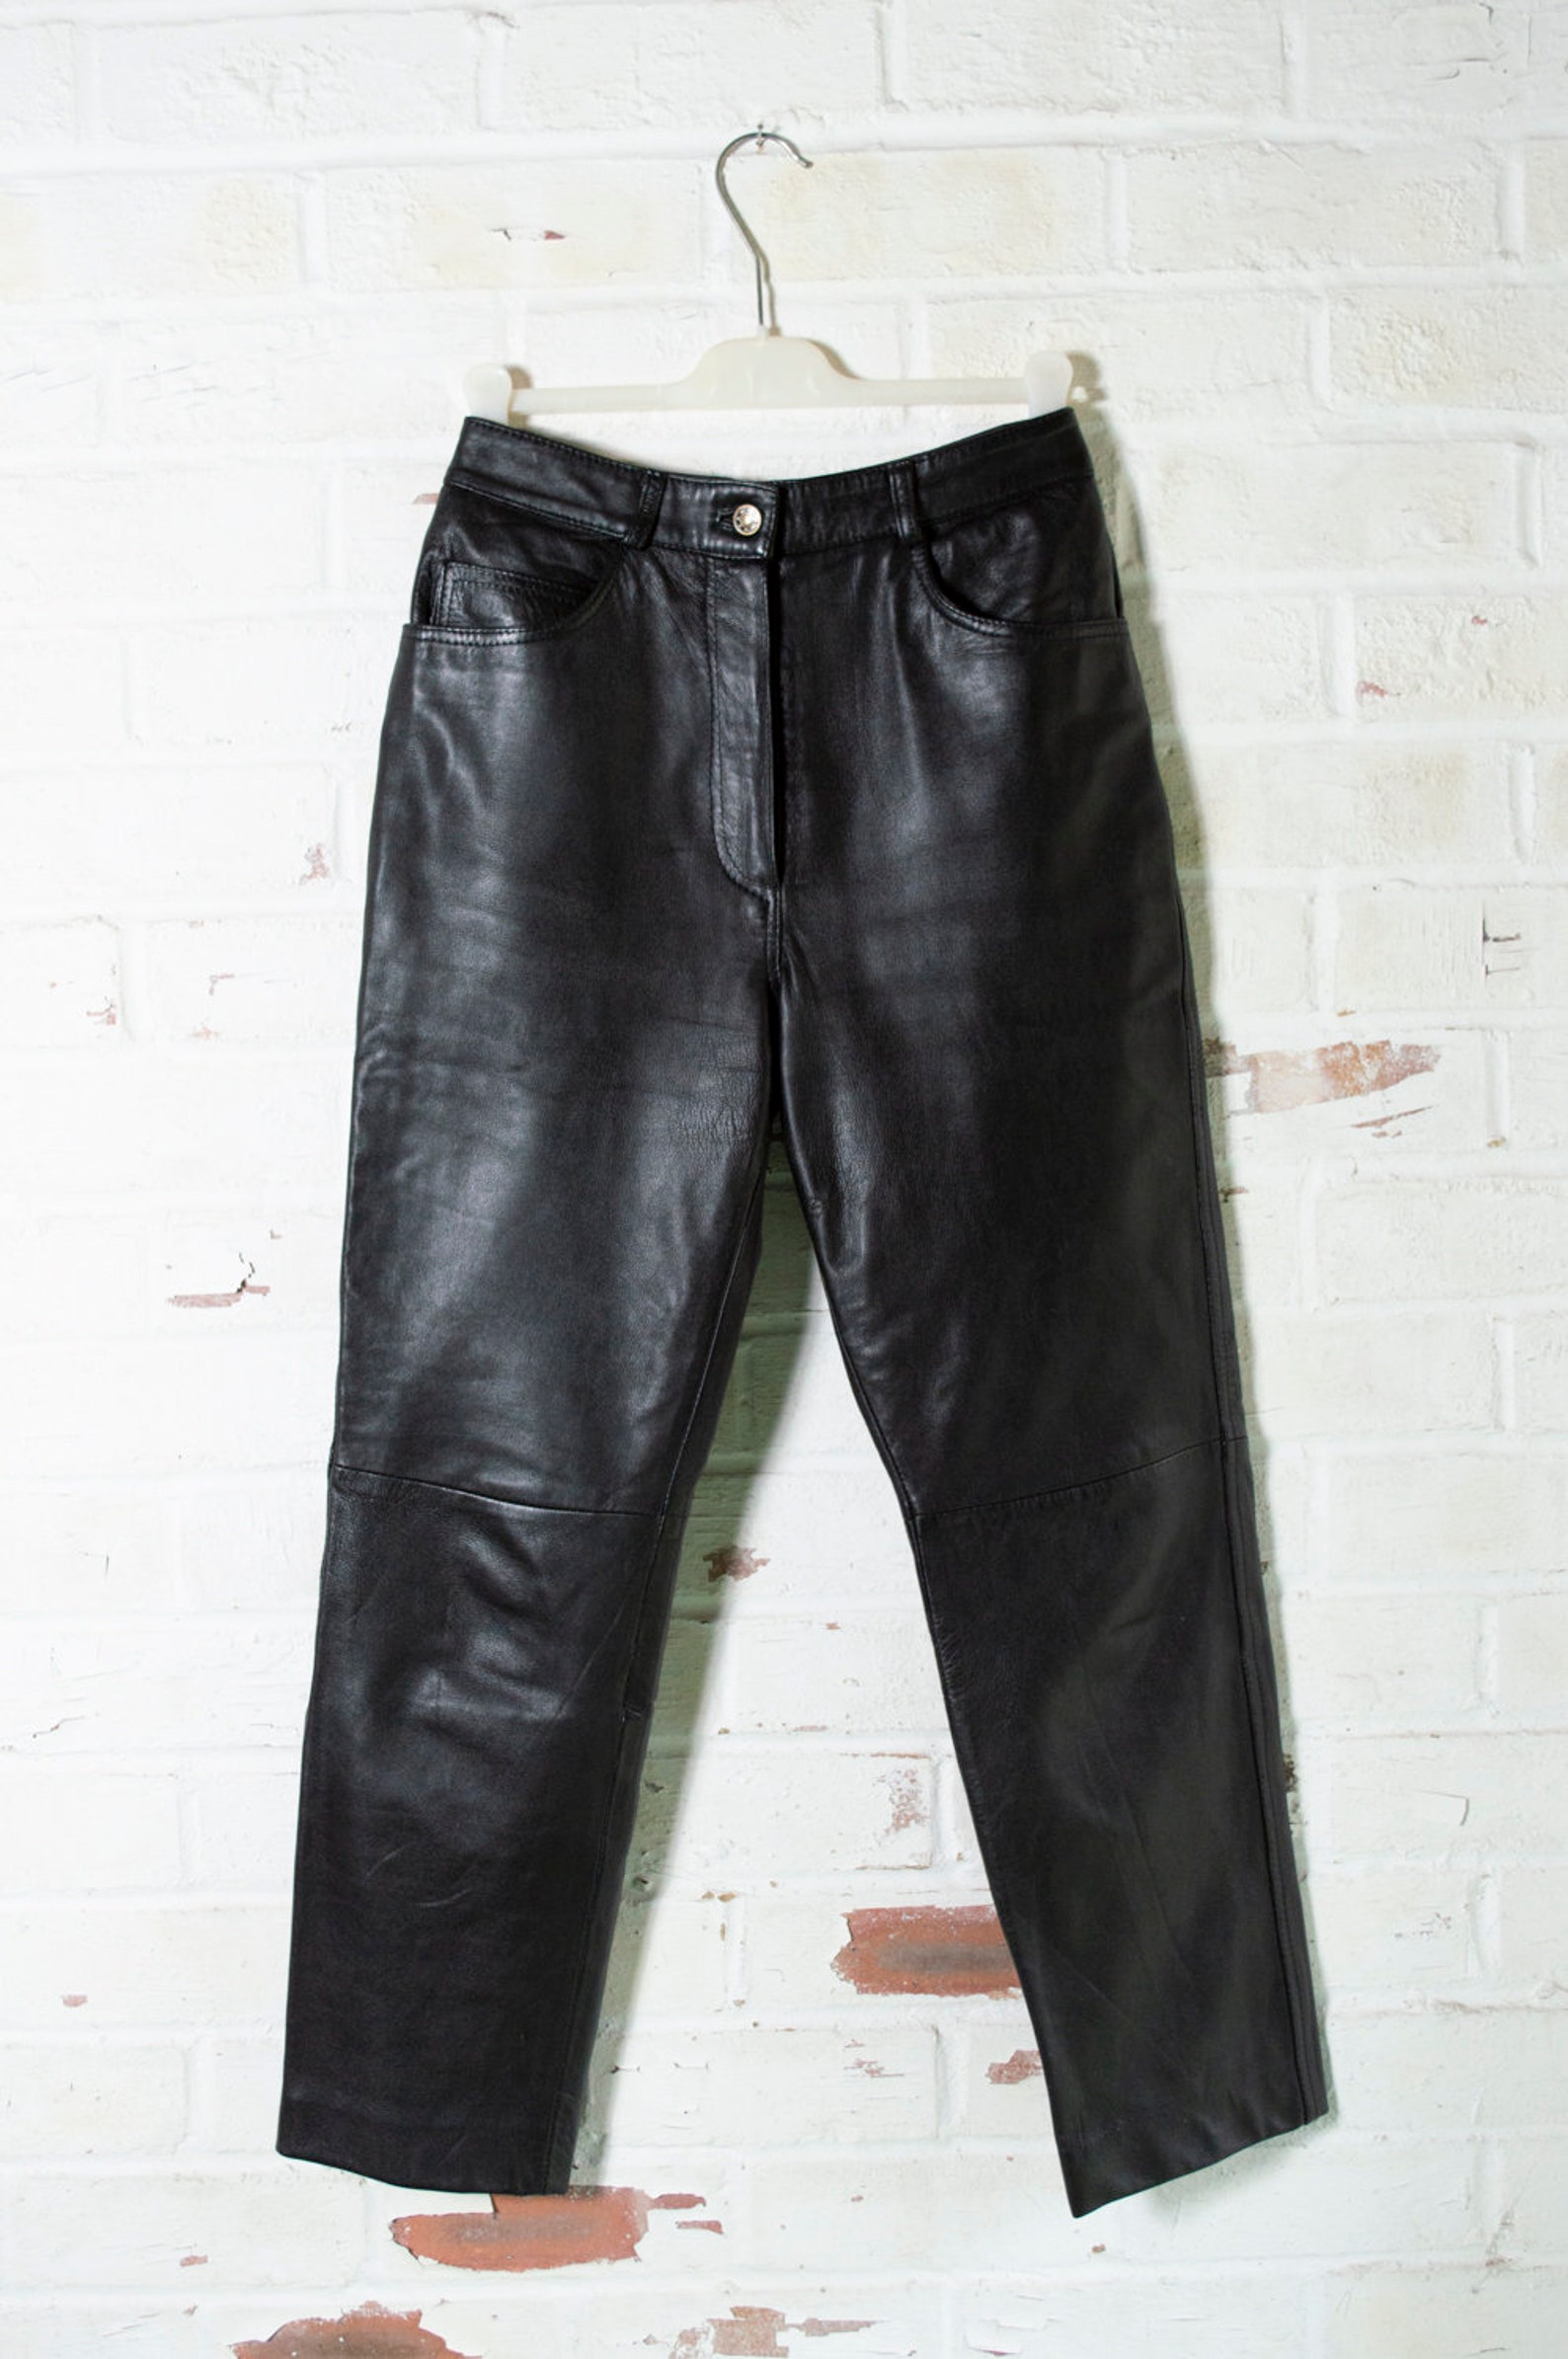 Vintage 1980s high rise black leather biker trousers pants | Etsy